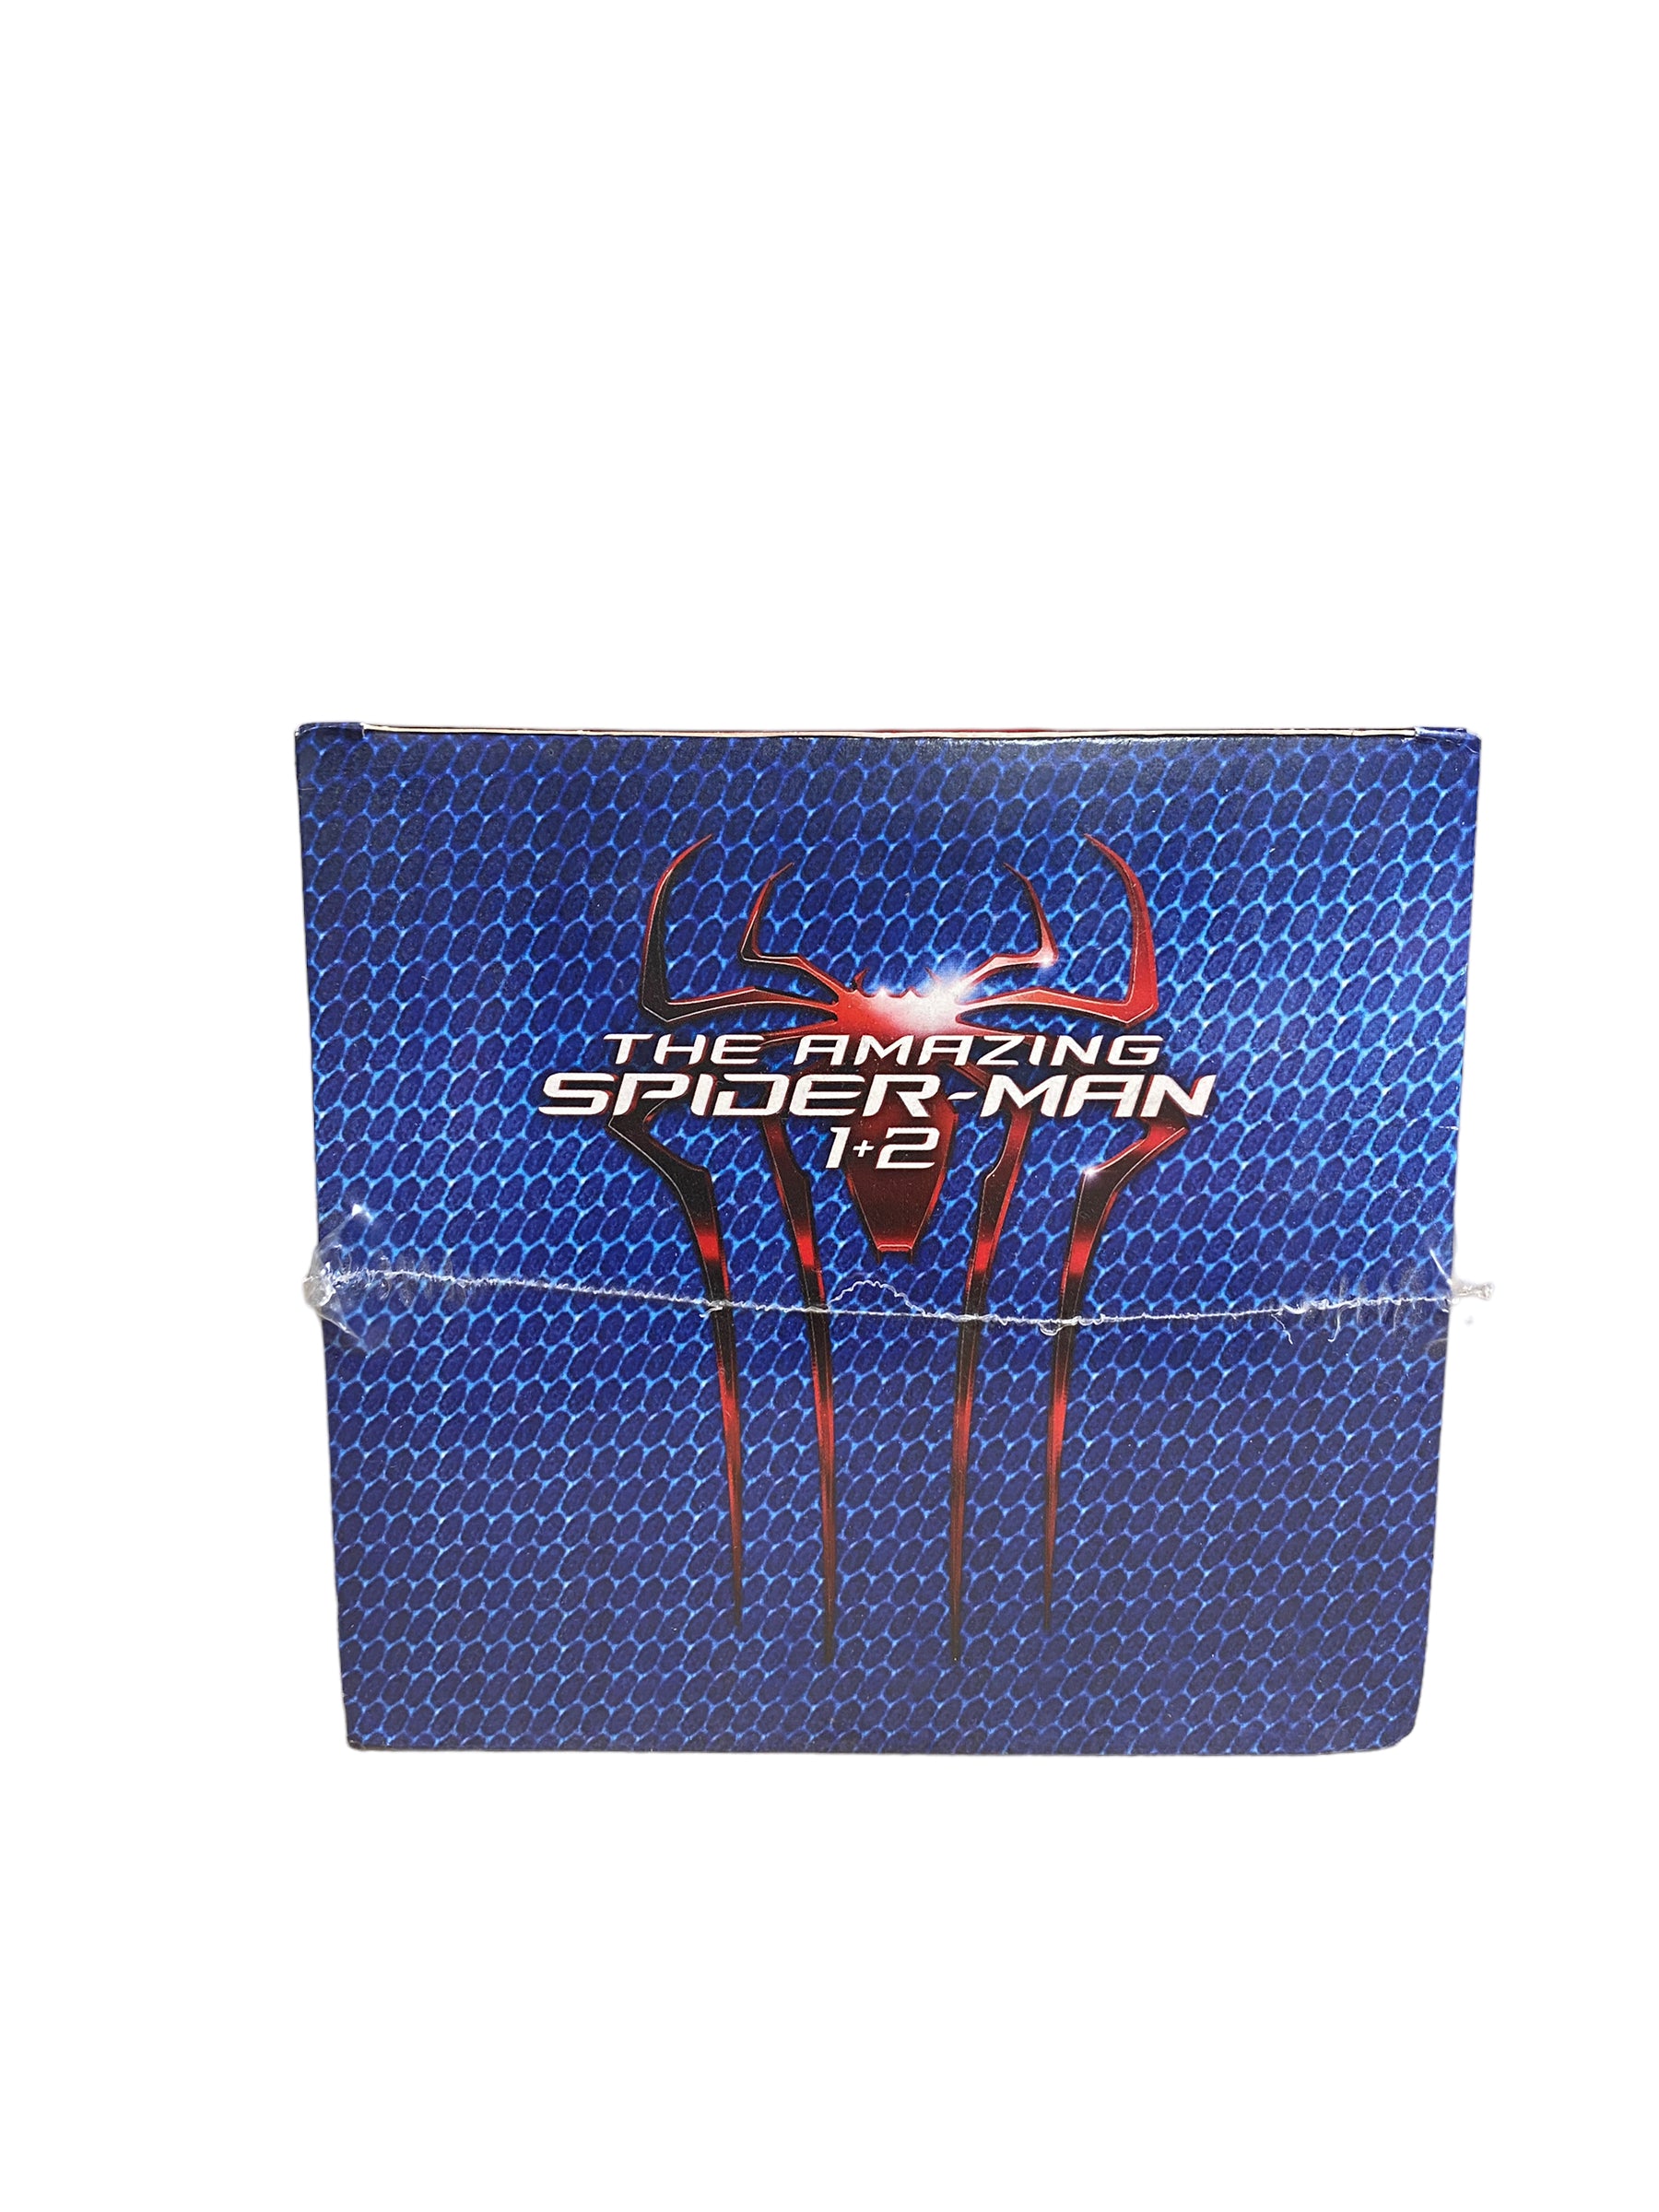 The Amazing Spider-Man 1 + 2 Funko Pop Blu-ray Bundle - Marvel - Sealed - Condition 7/10